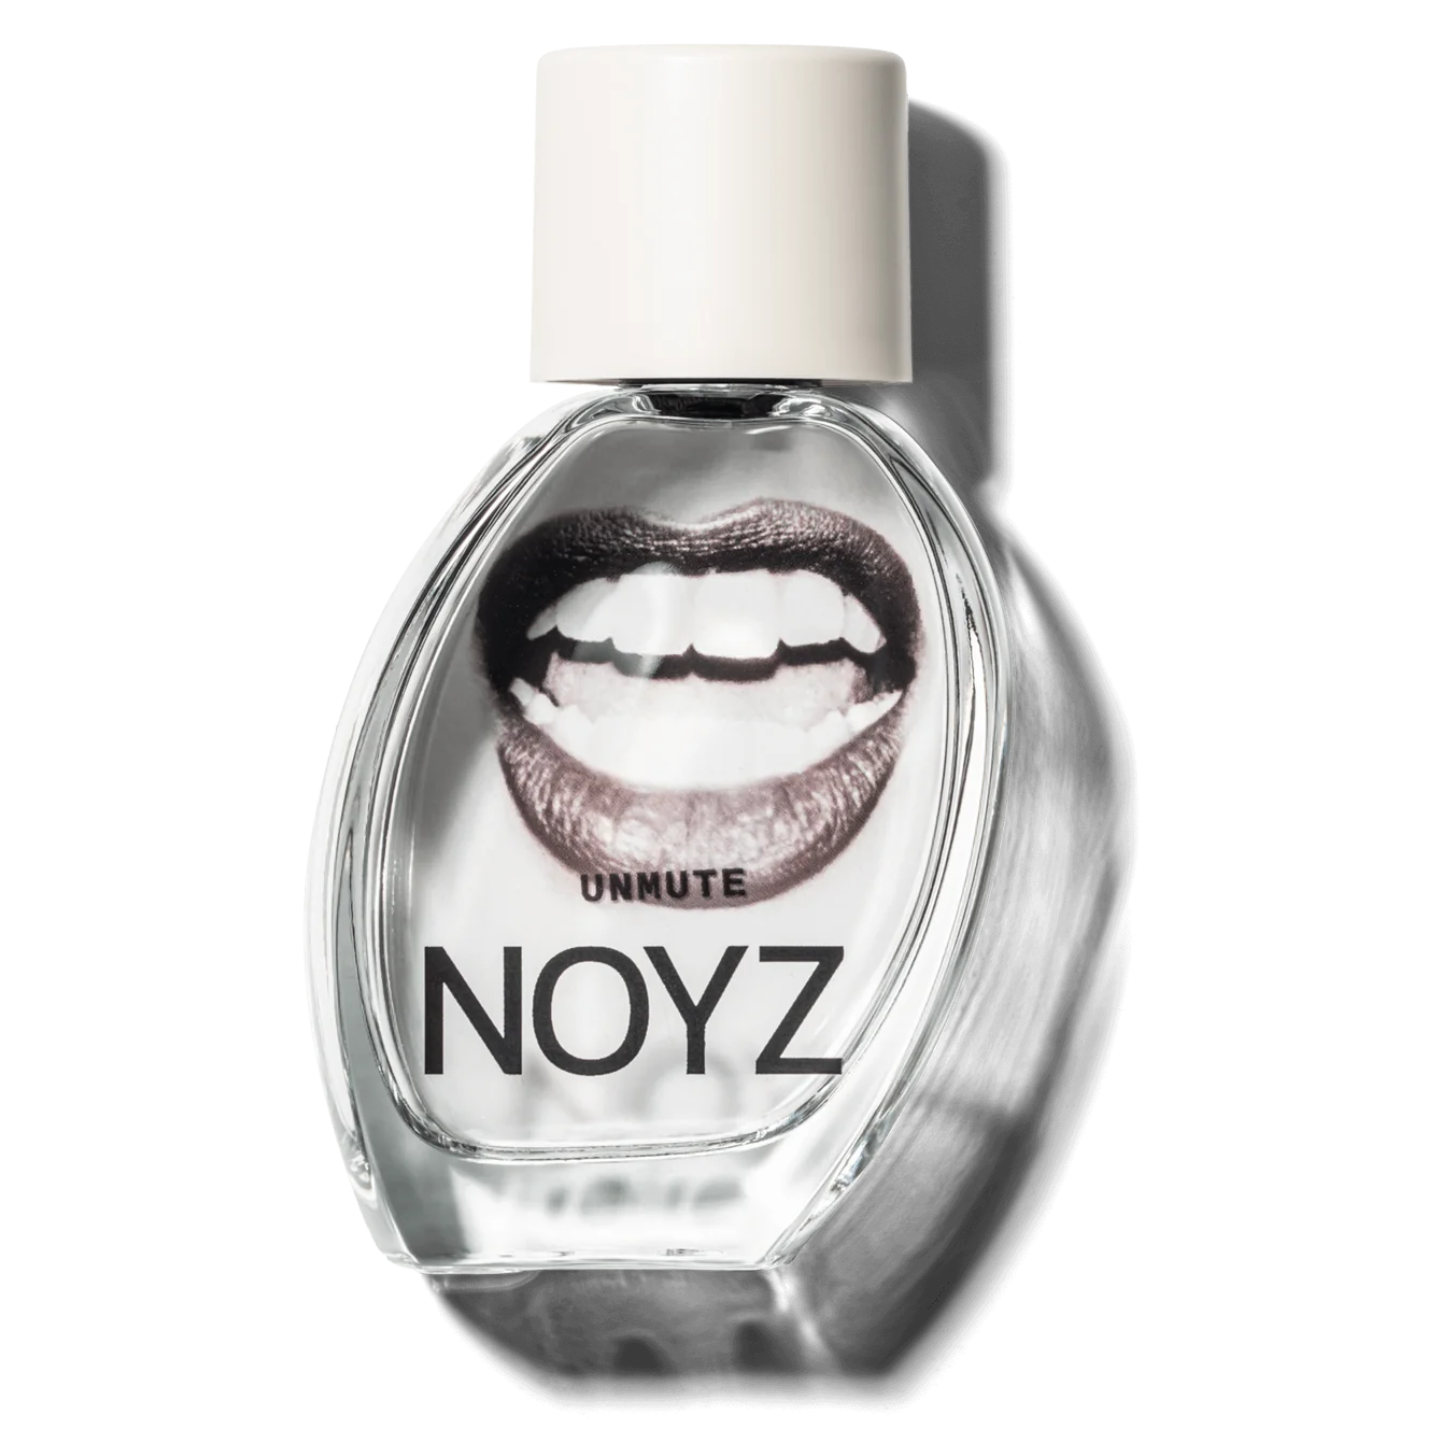 Noyz Unmute fragrance